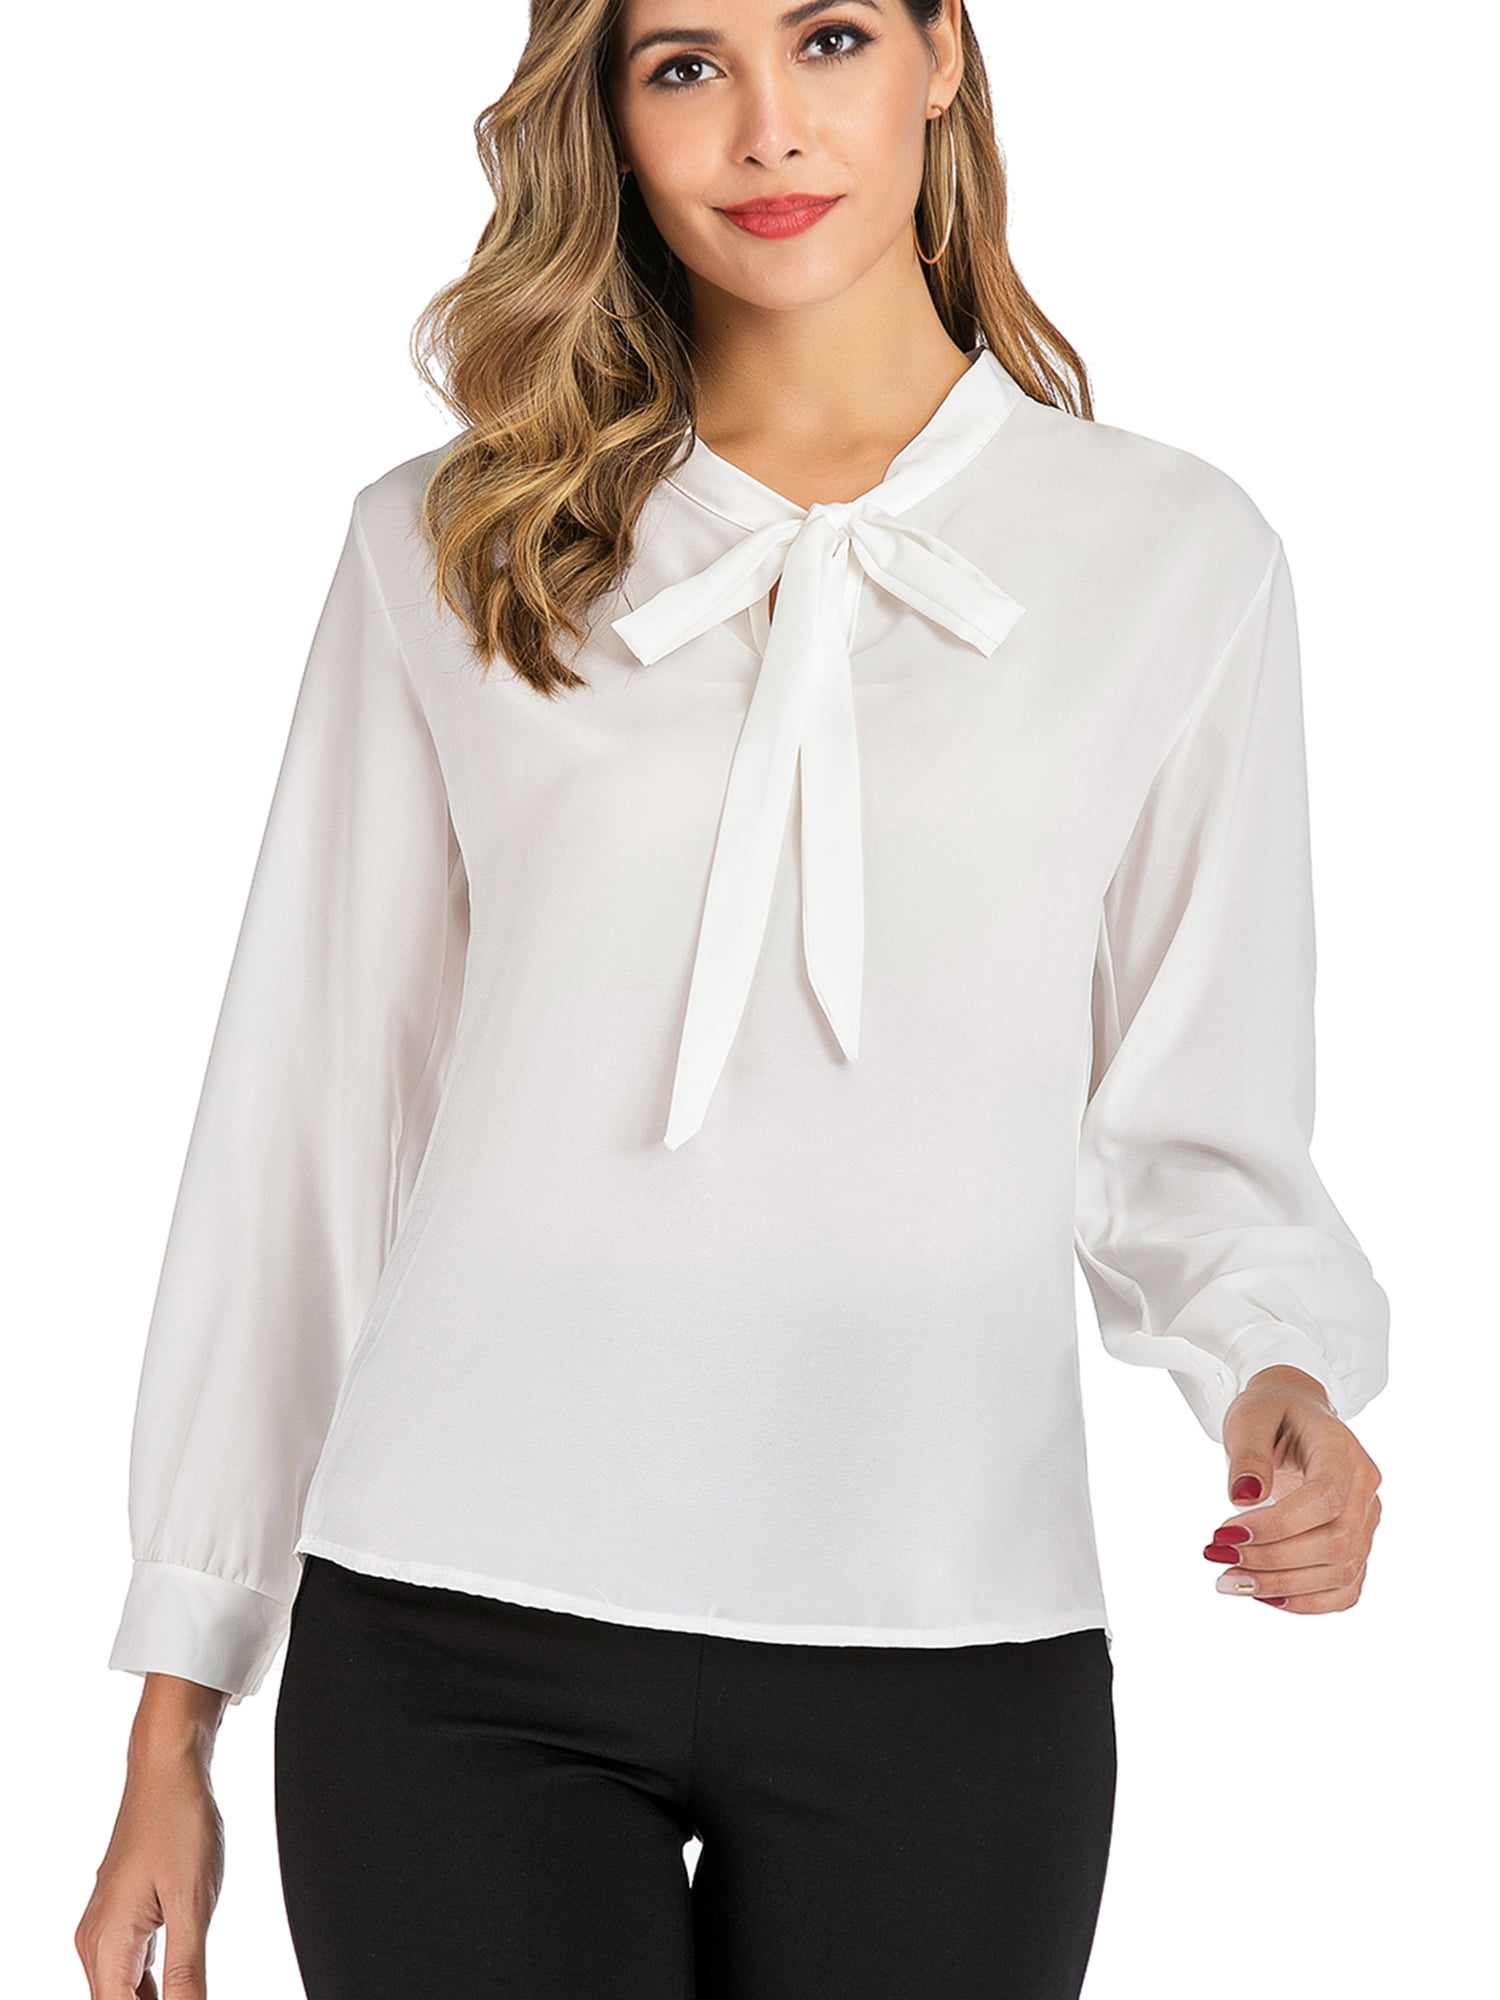 skrive Fellow Uensartet Womens Plus Size Chiffon Blouses Long Sleeve Casual V Neck Chiffon Blouses  Tops Bow-Tie Neck Ladies Work Shirt,White M-3XL - Walmart.com